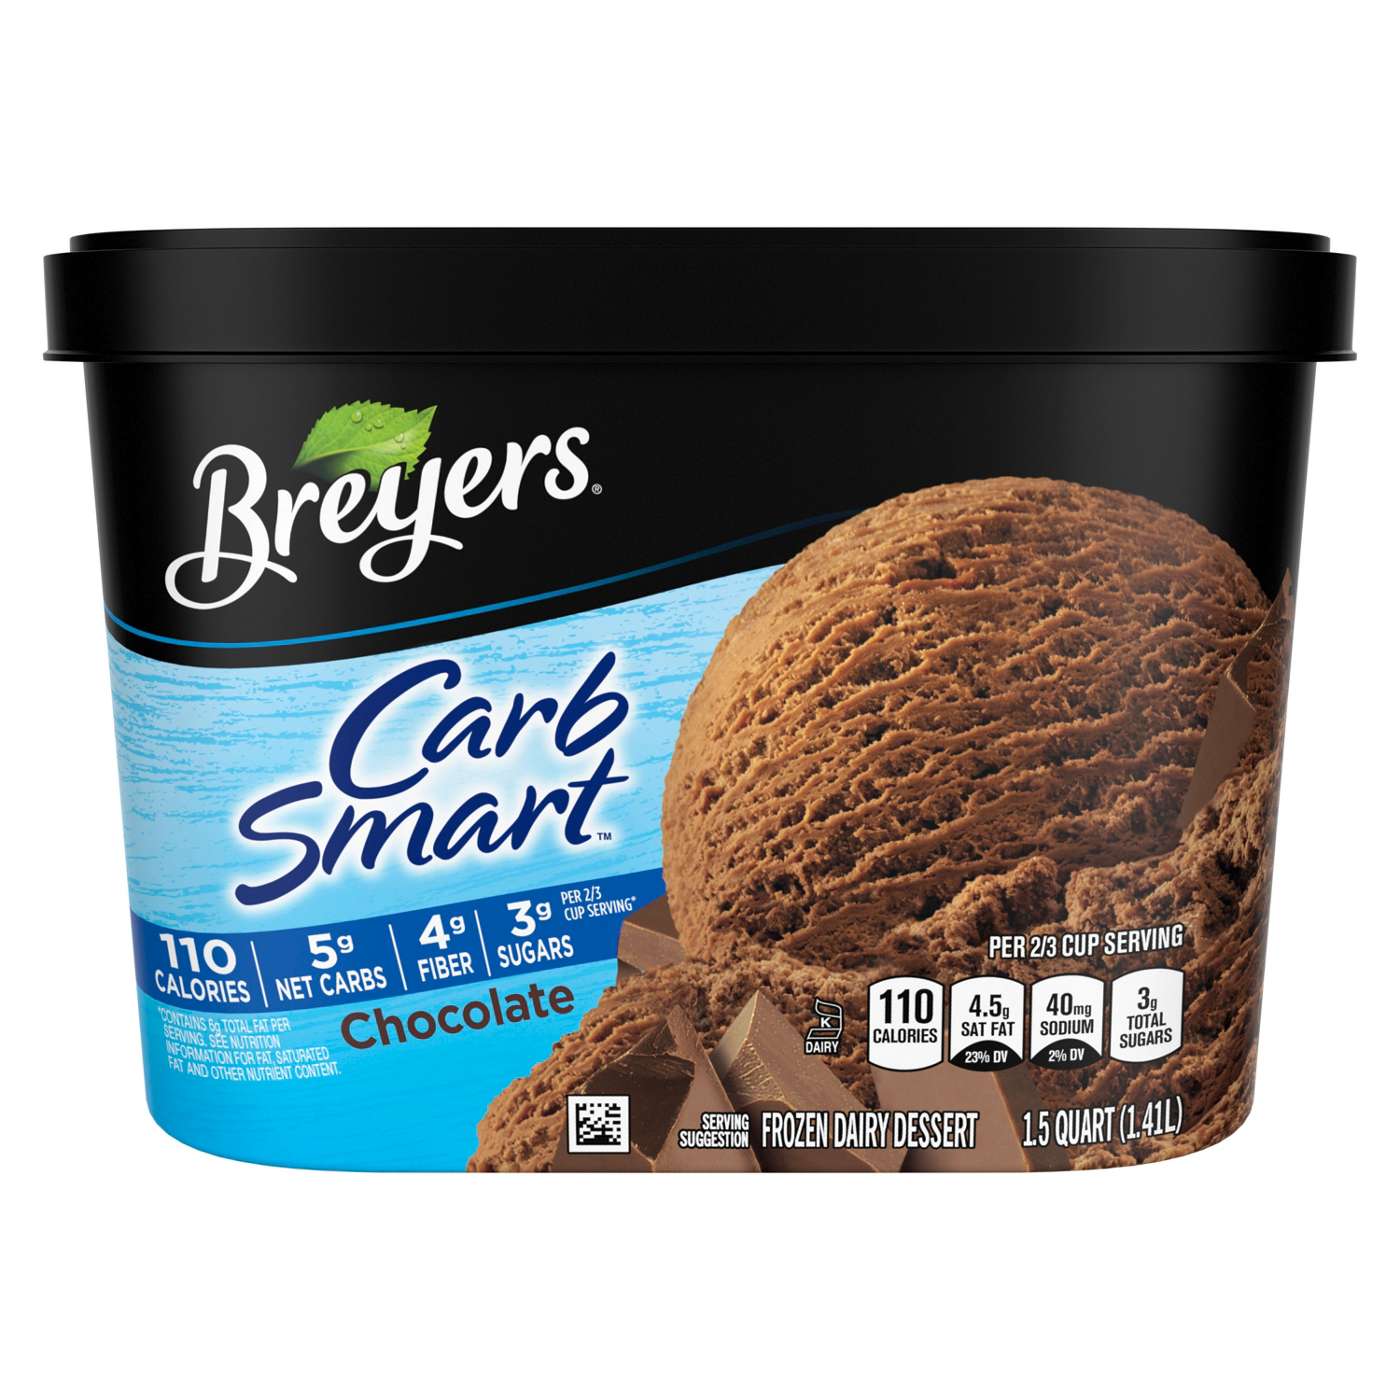 Breyers Carb Smart Chocolate Frozen Dairy Dessert; image 1 of 4